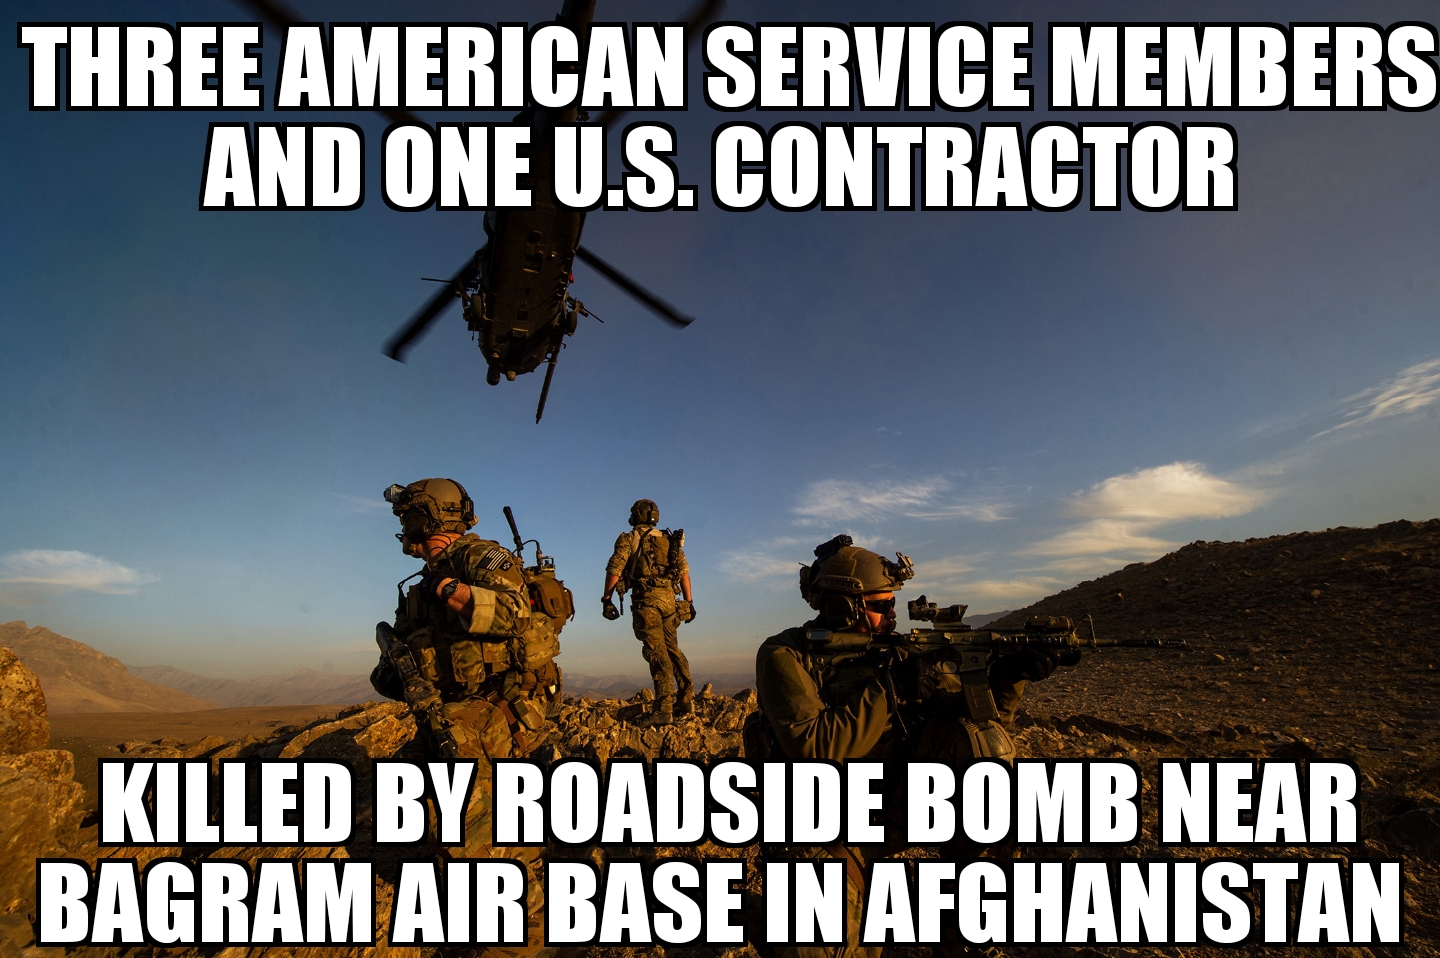 U.S. soldiers, contractor killed in Afghanistan